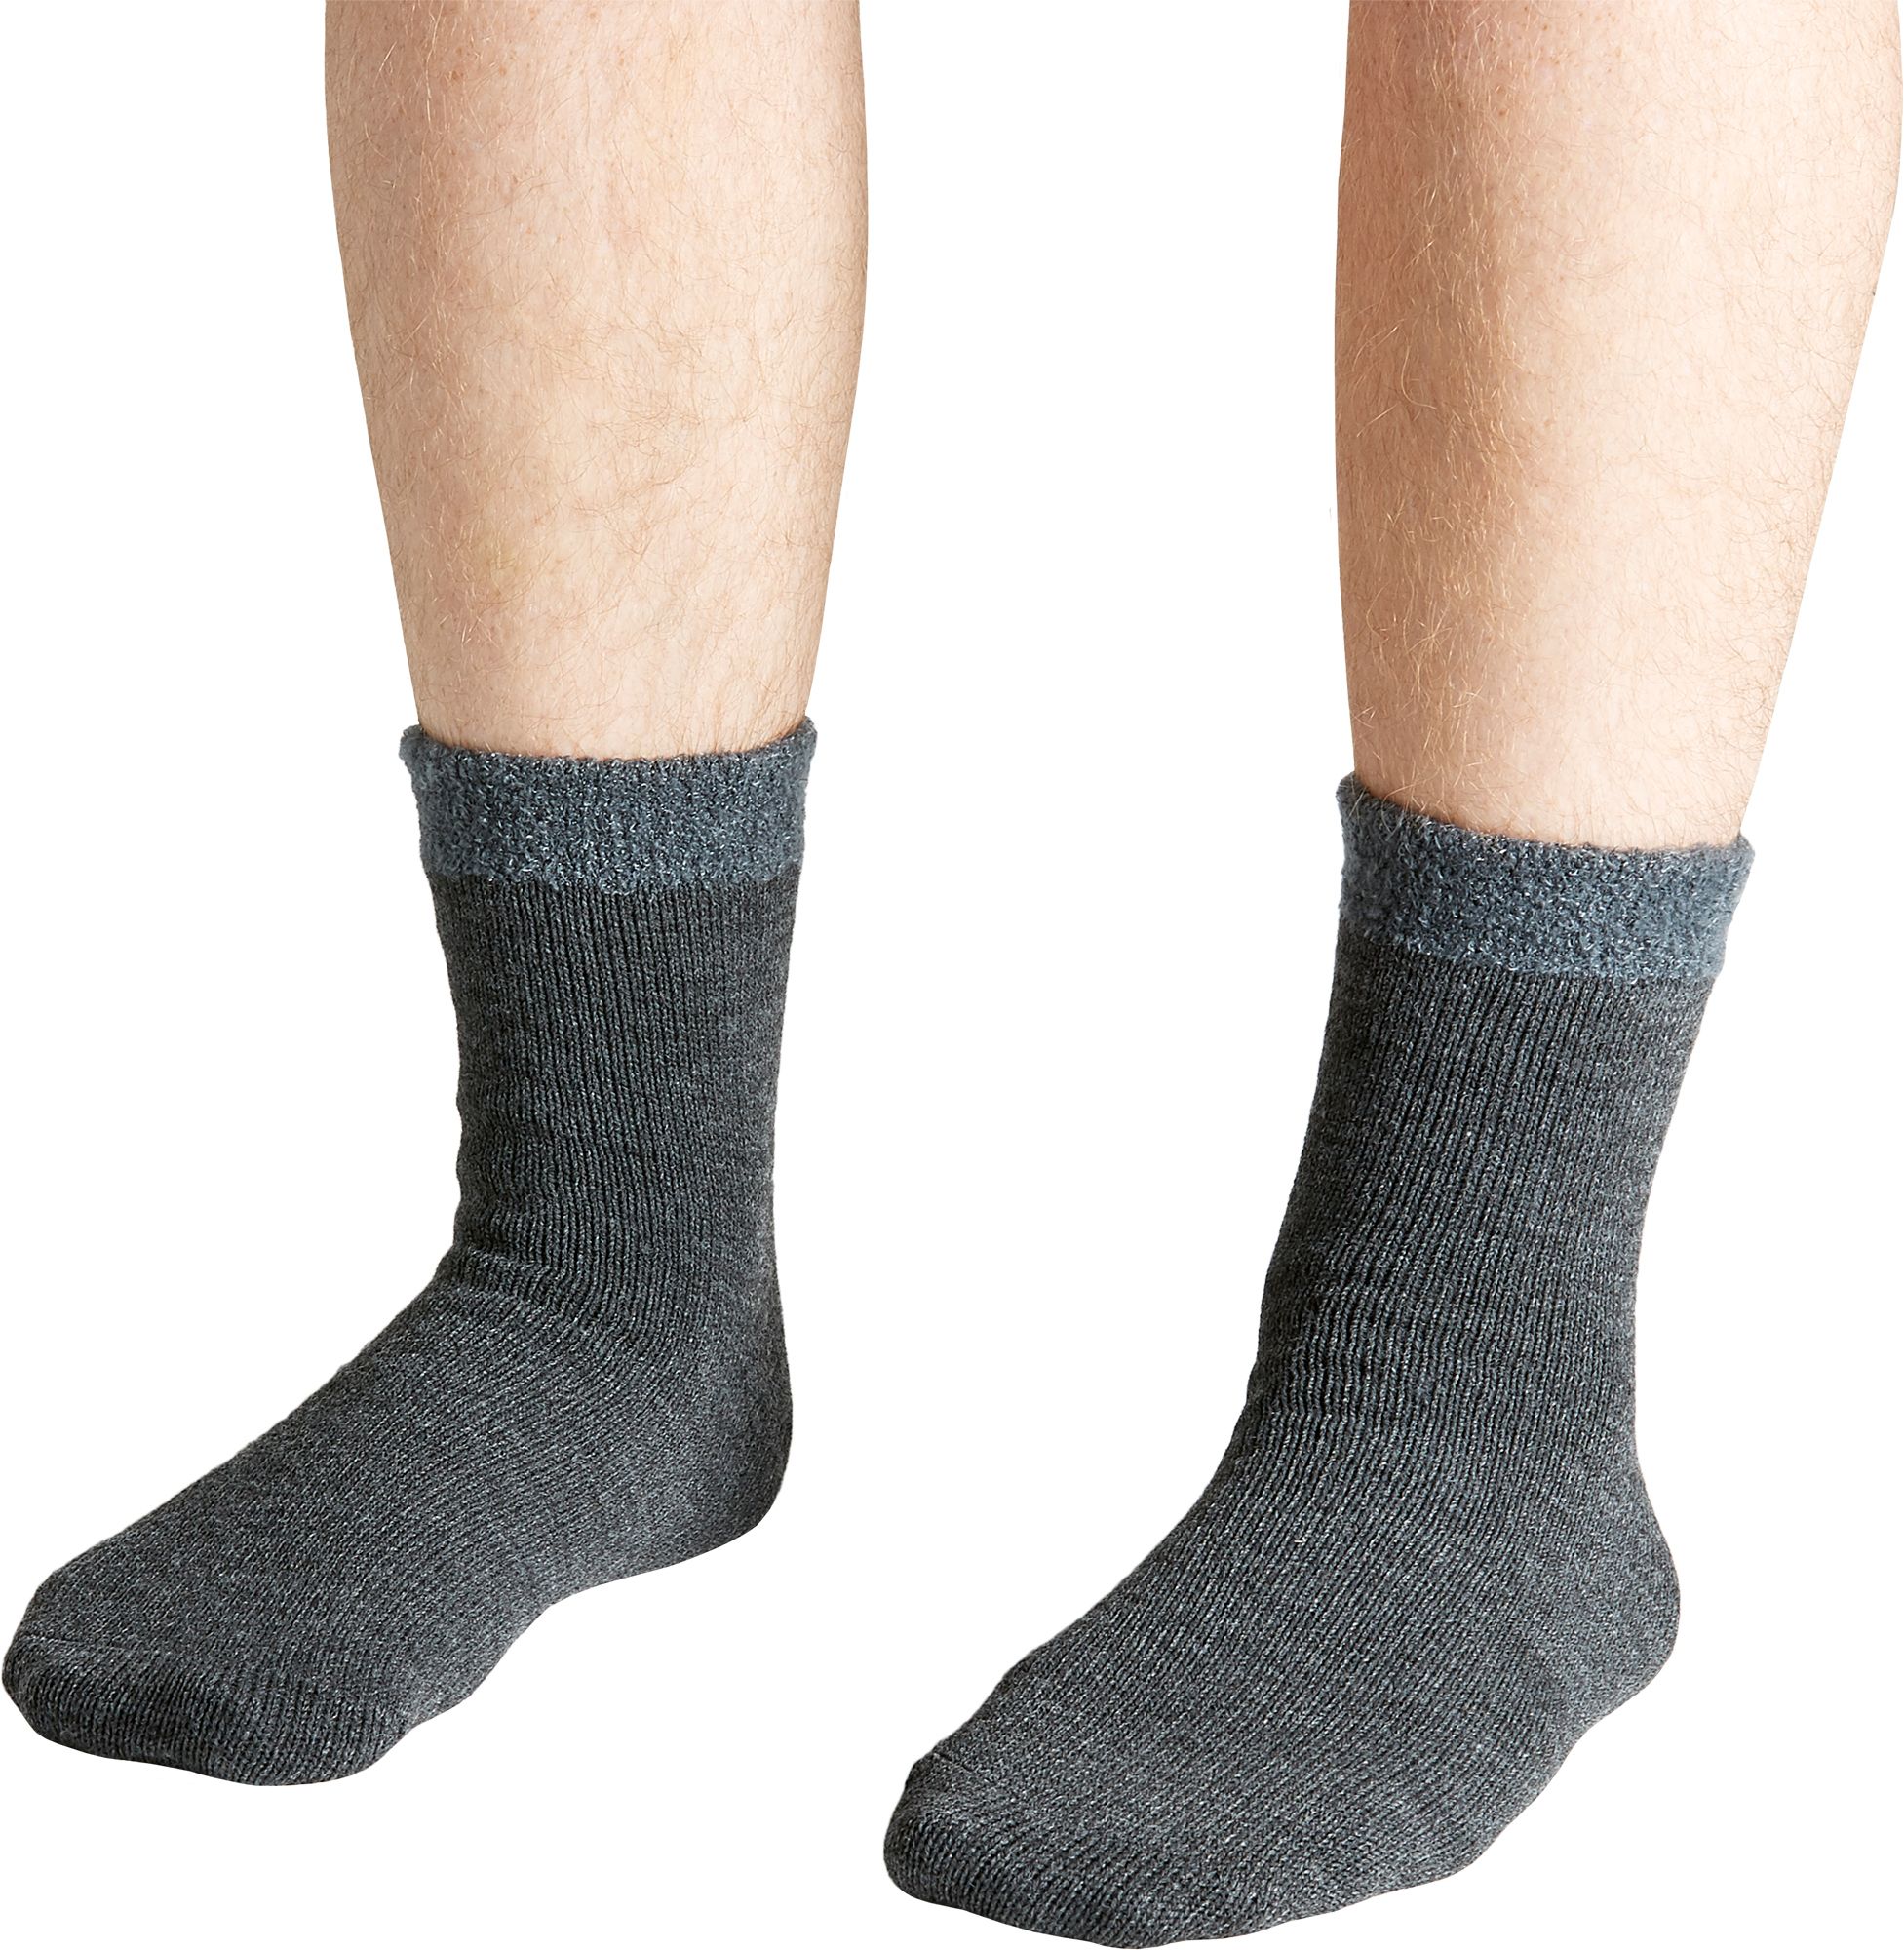 mens grey socks